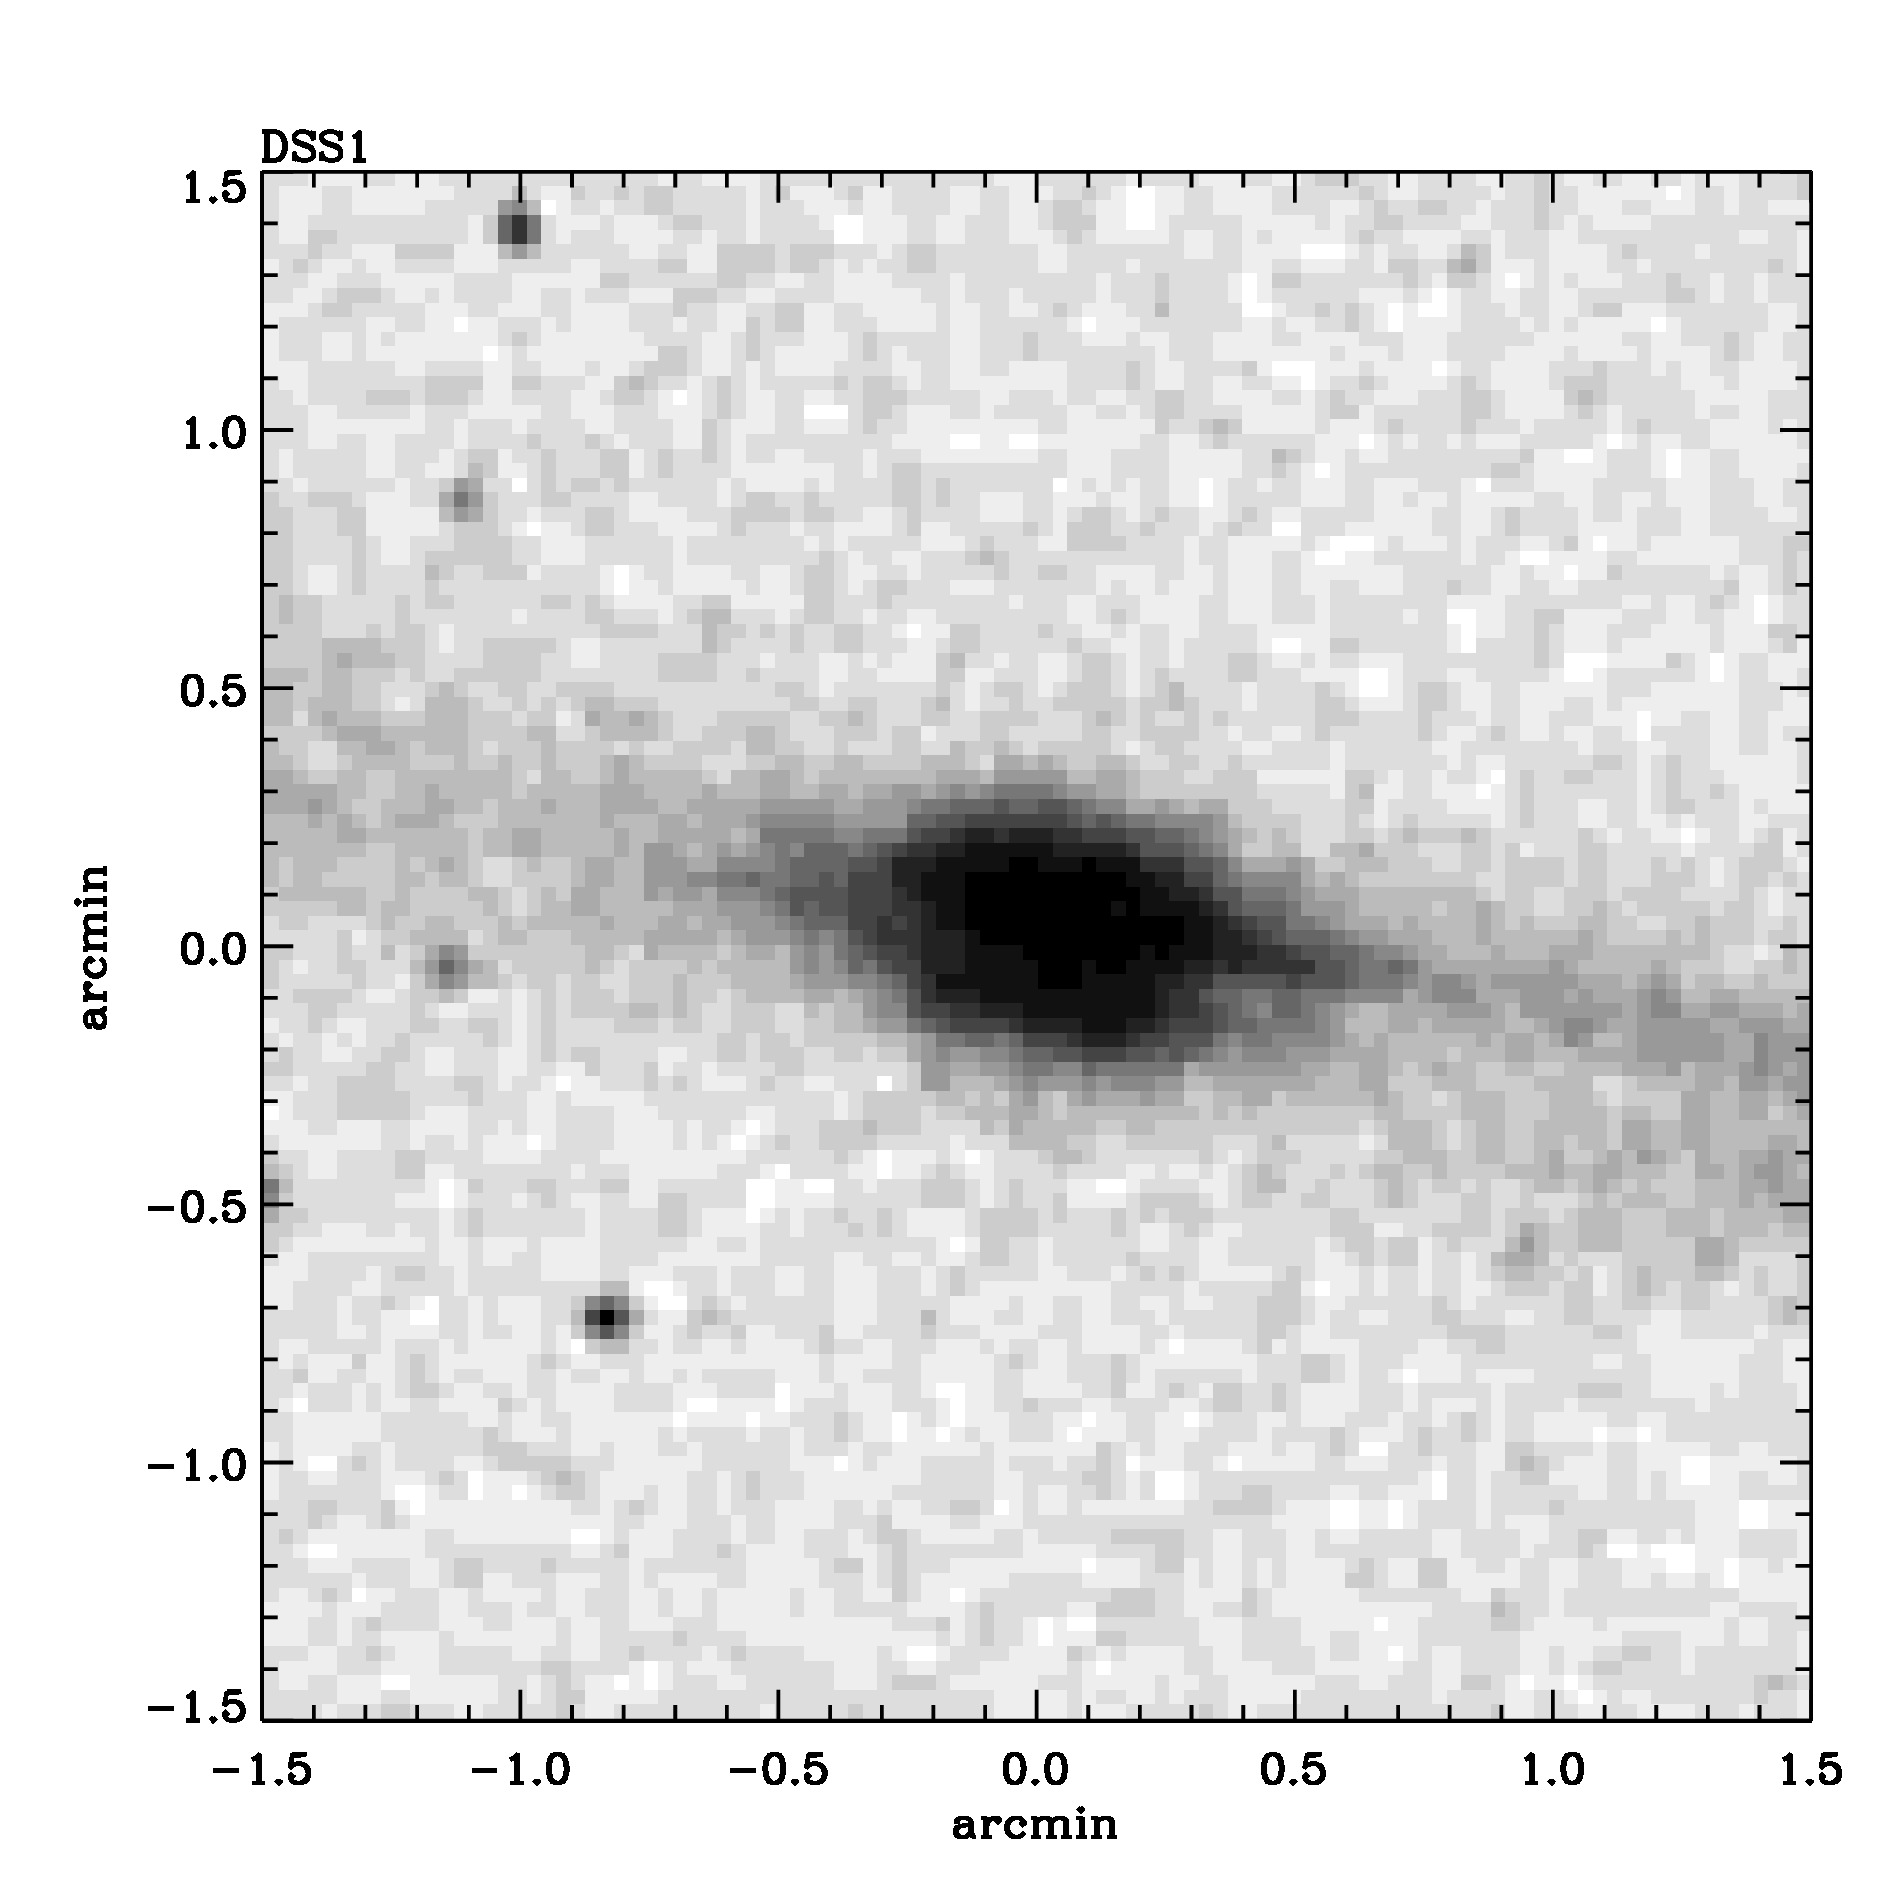 Optical image for SWIFT J0149.2+2153B